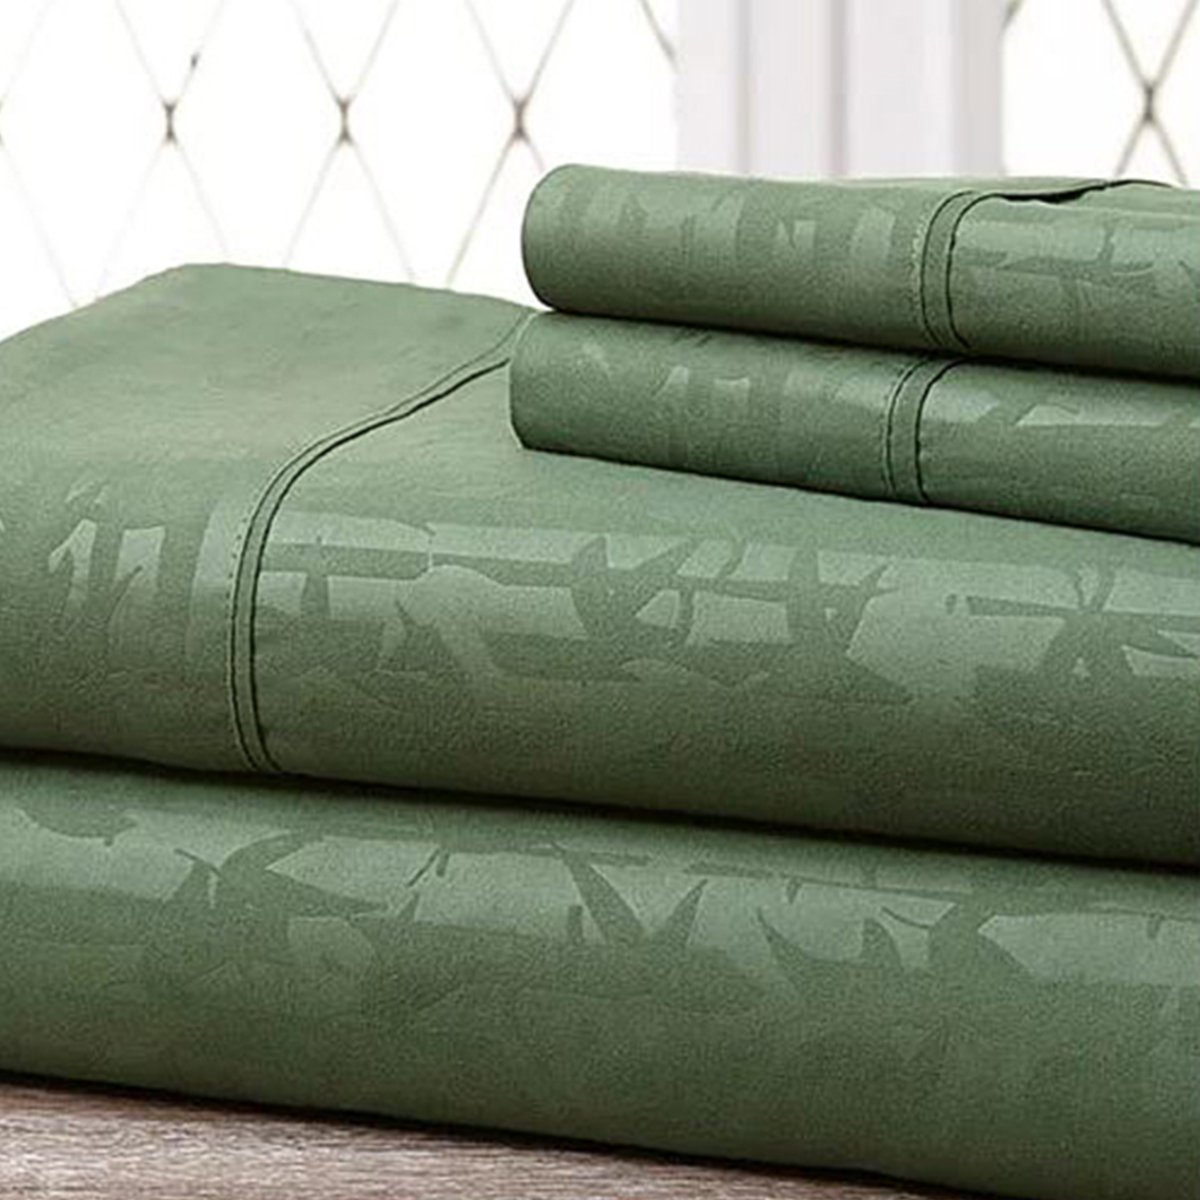 Super-soft 1600 Series Bamboo Embossed Bed Sheet, Hunter Green - Queen, 4 Piece